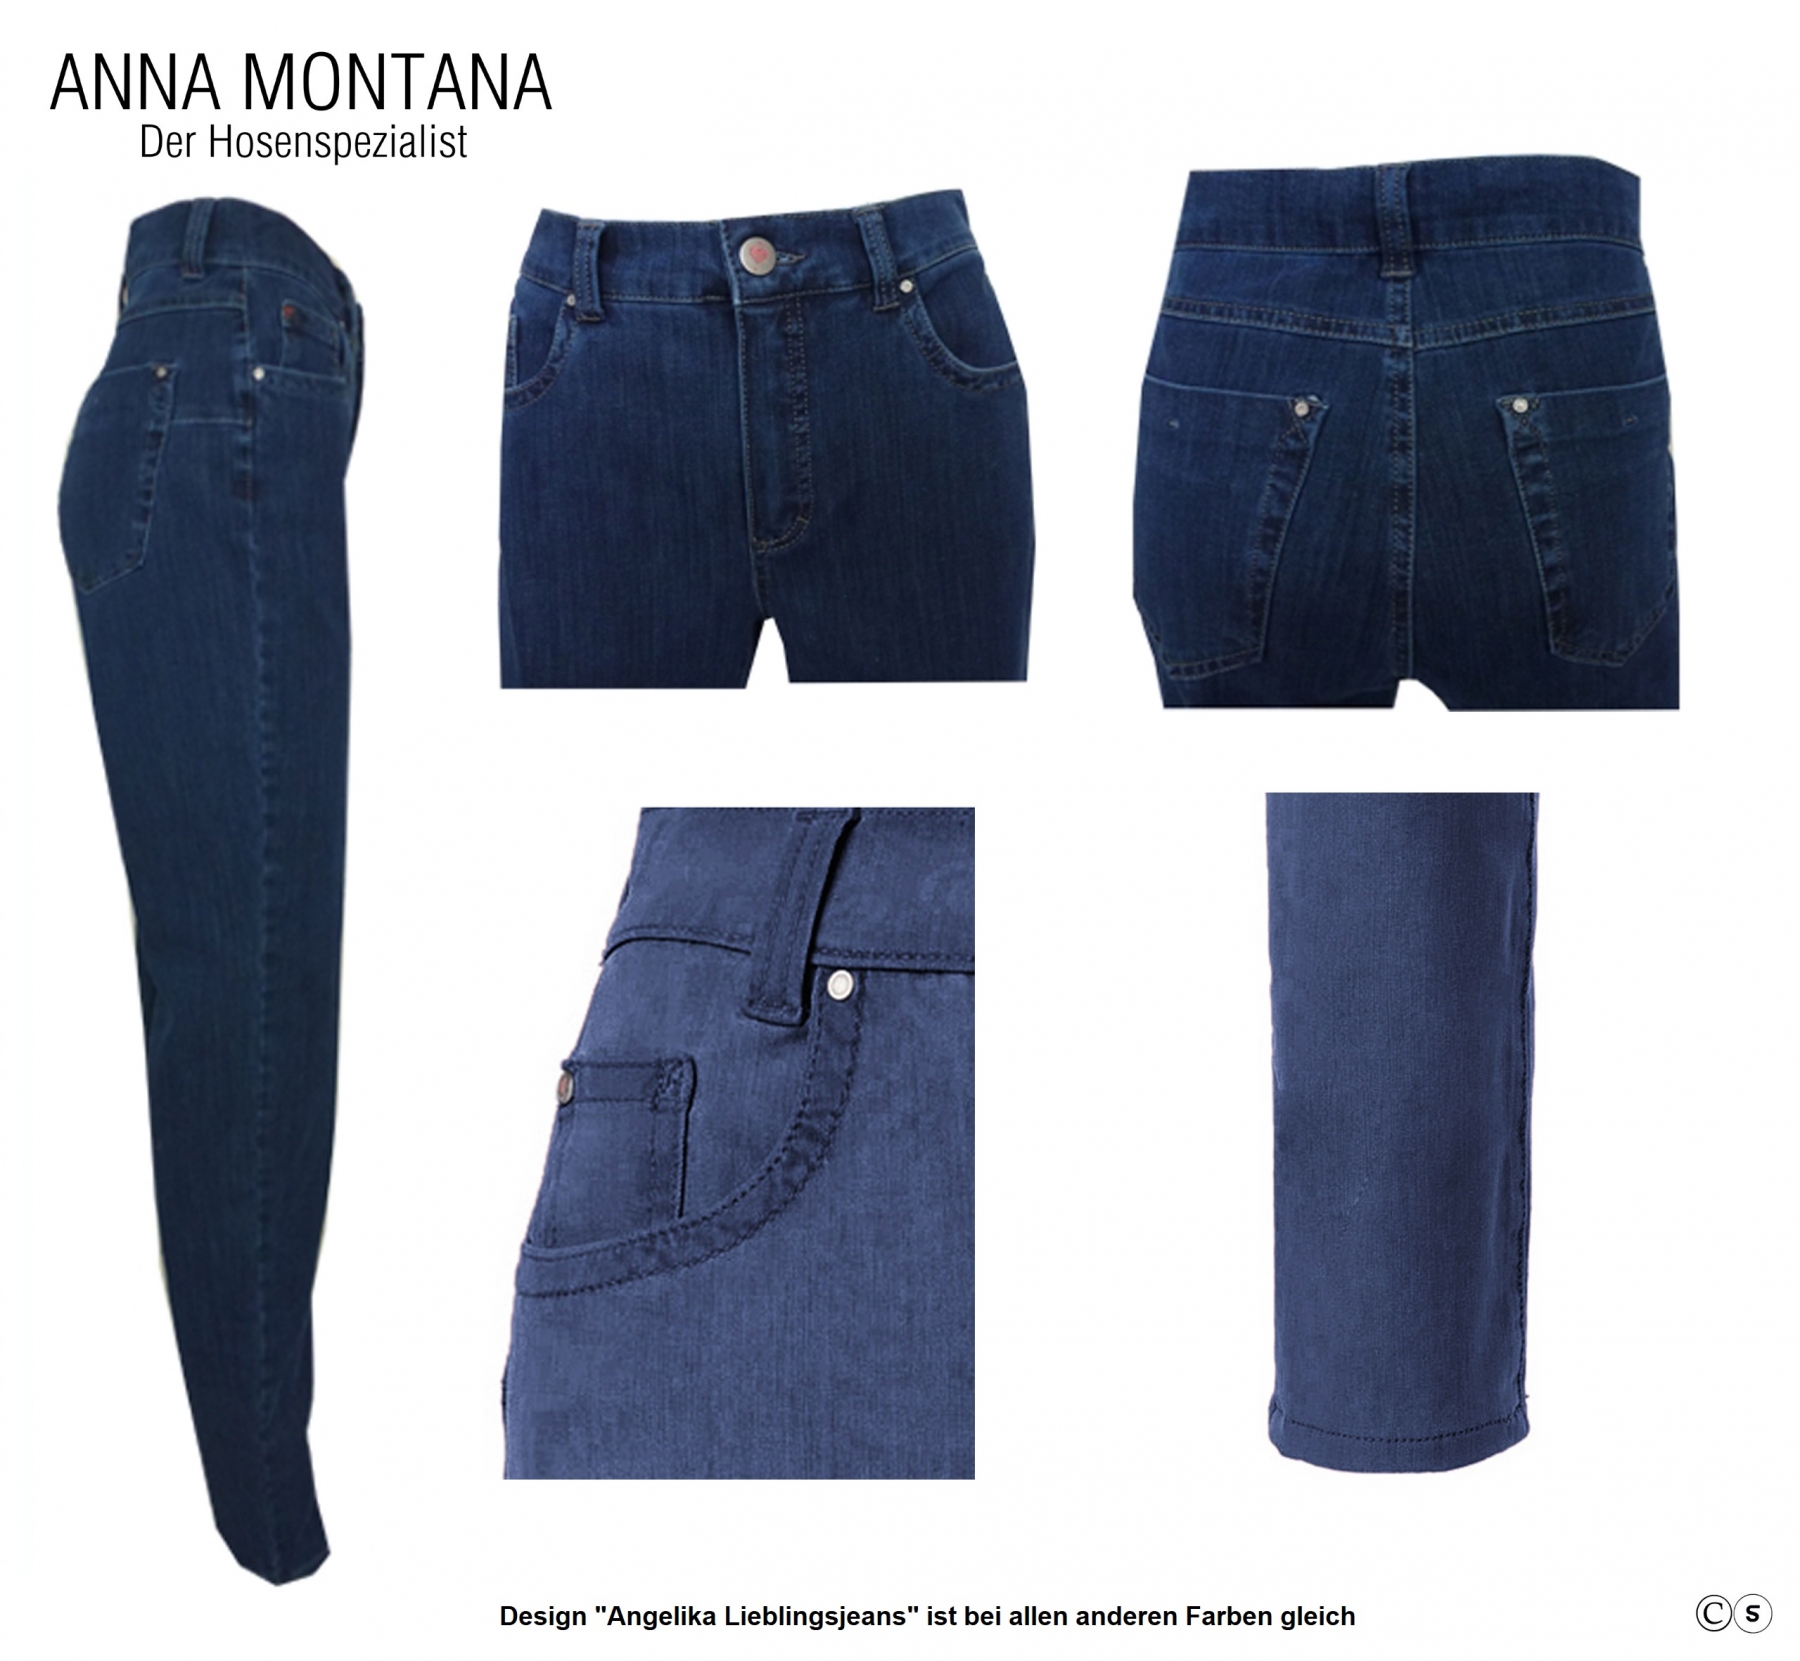 Angelika 1920 Favorite jeans / pants Sizes 36 to 48 / ANNA MONTANA